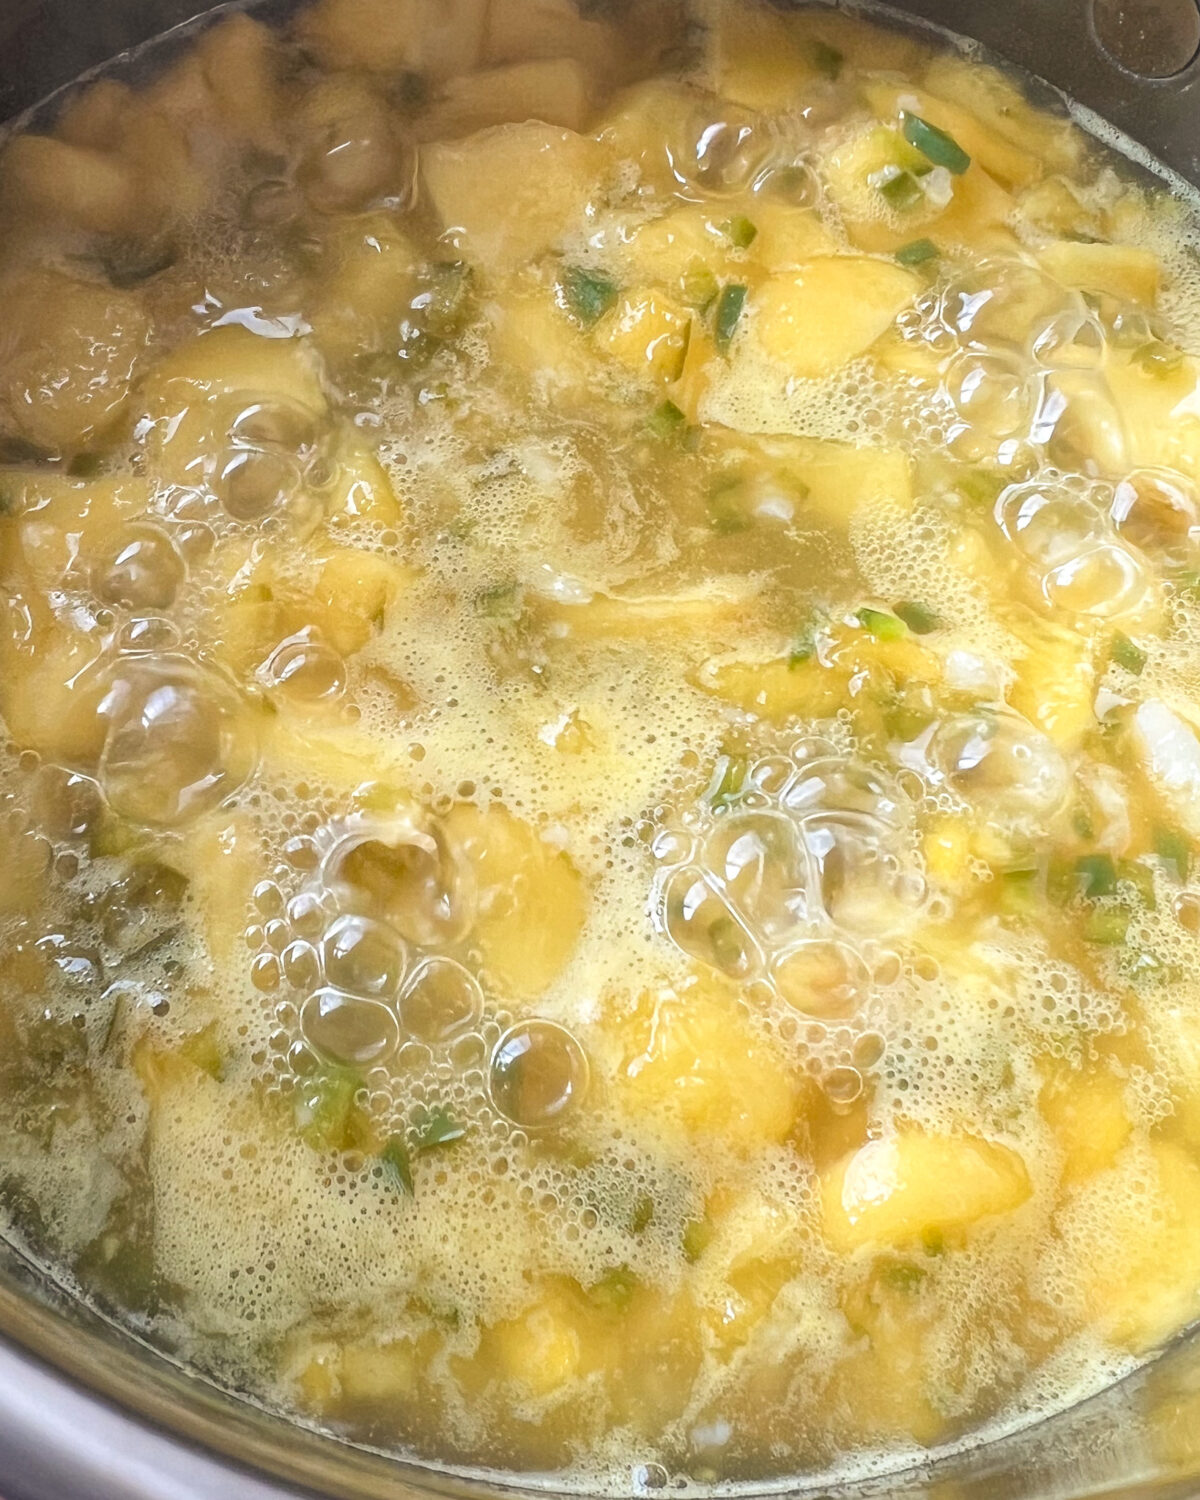 Bring a small saucepan with peaches, jalapeños, garlic, lemon zest, lemon juice, water, honey to a boil.